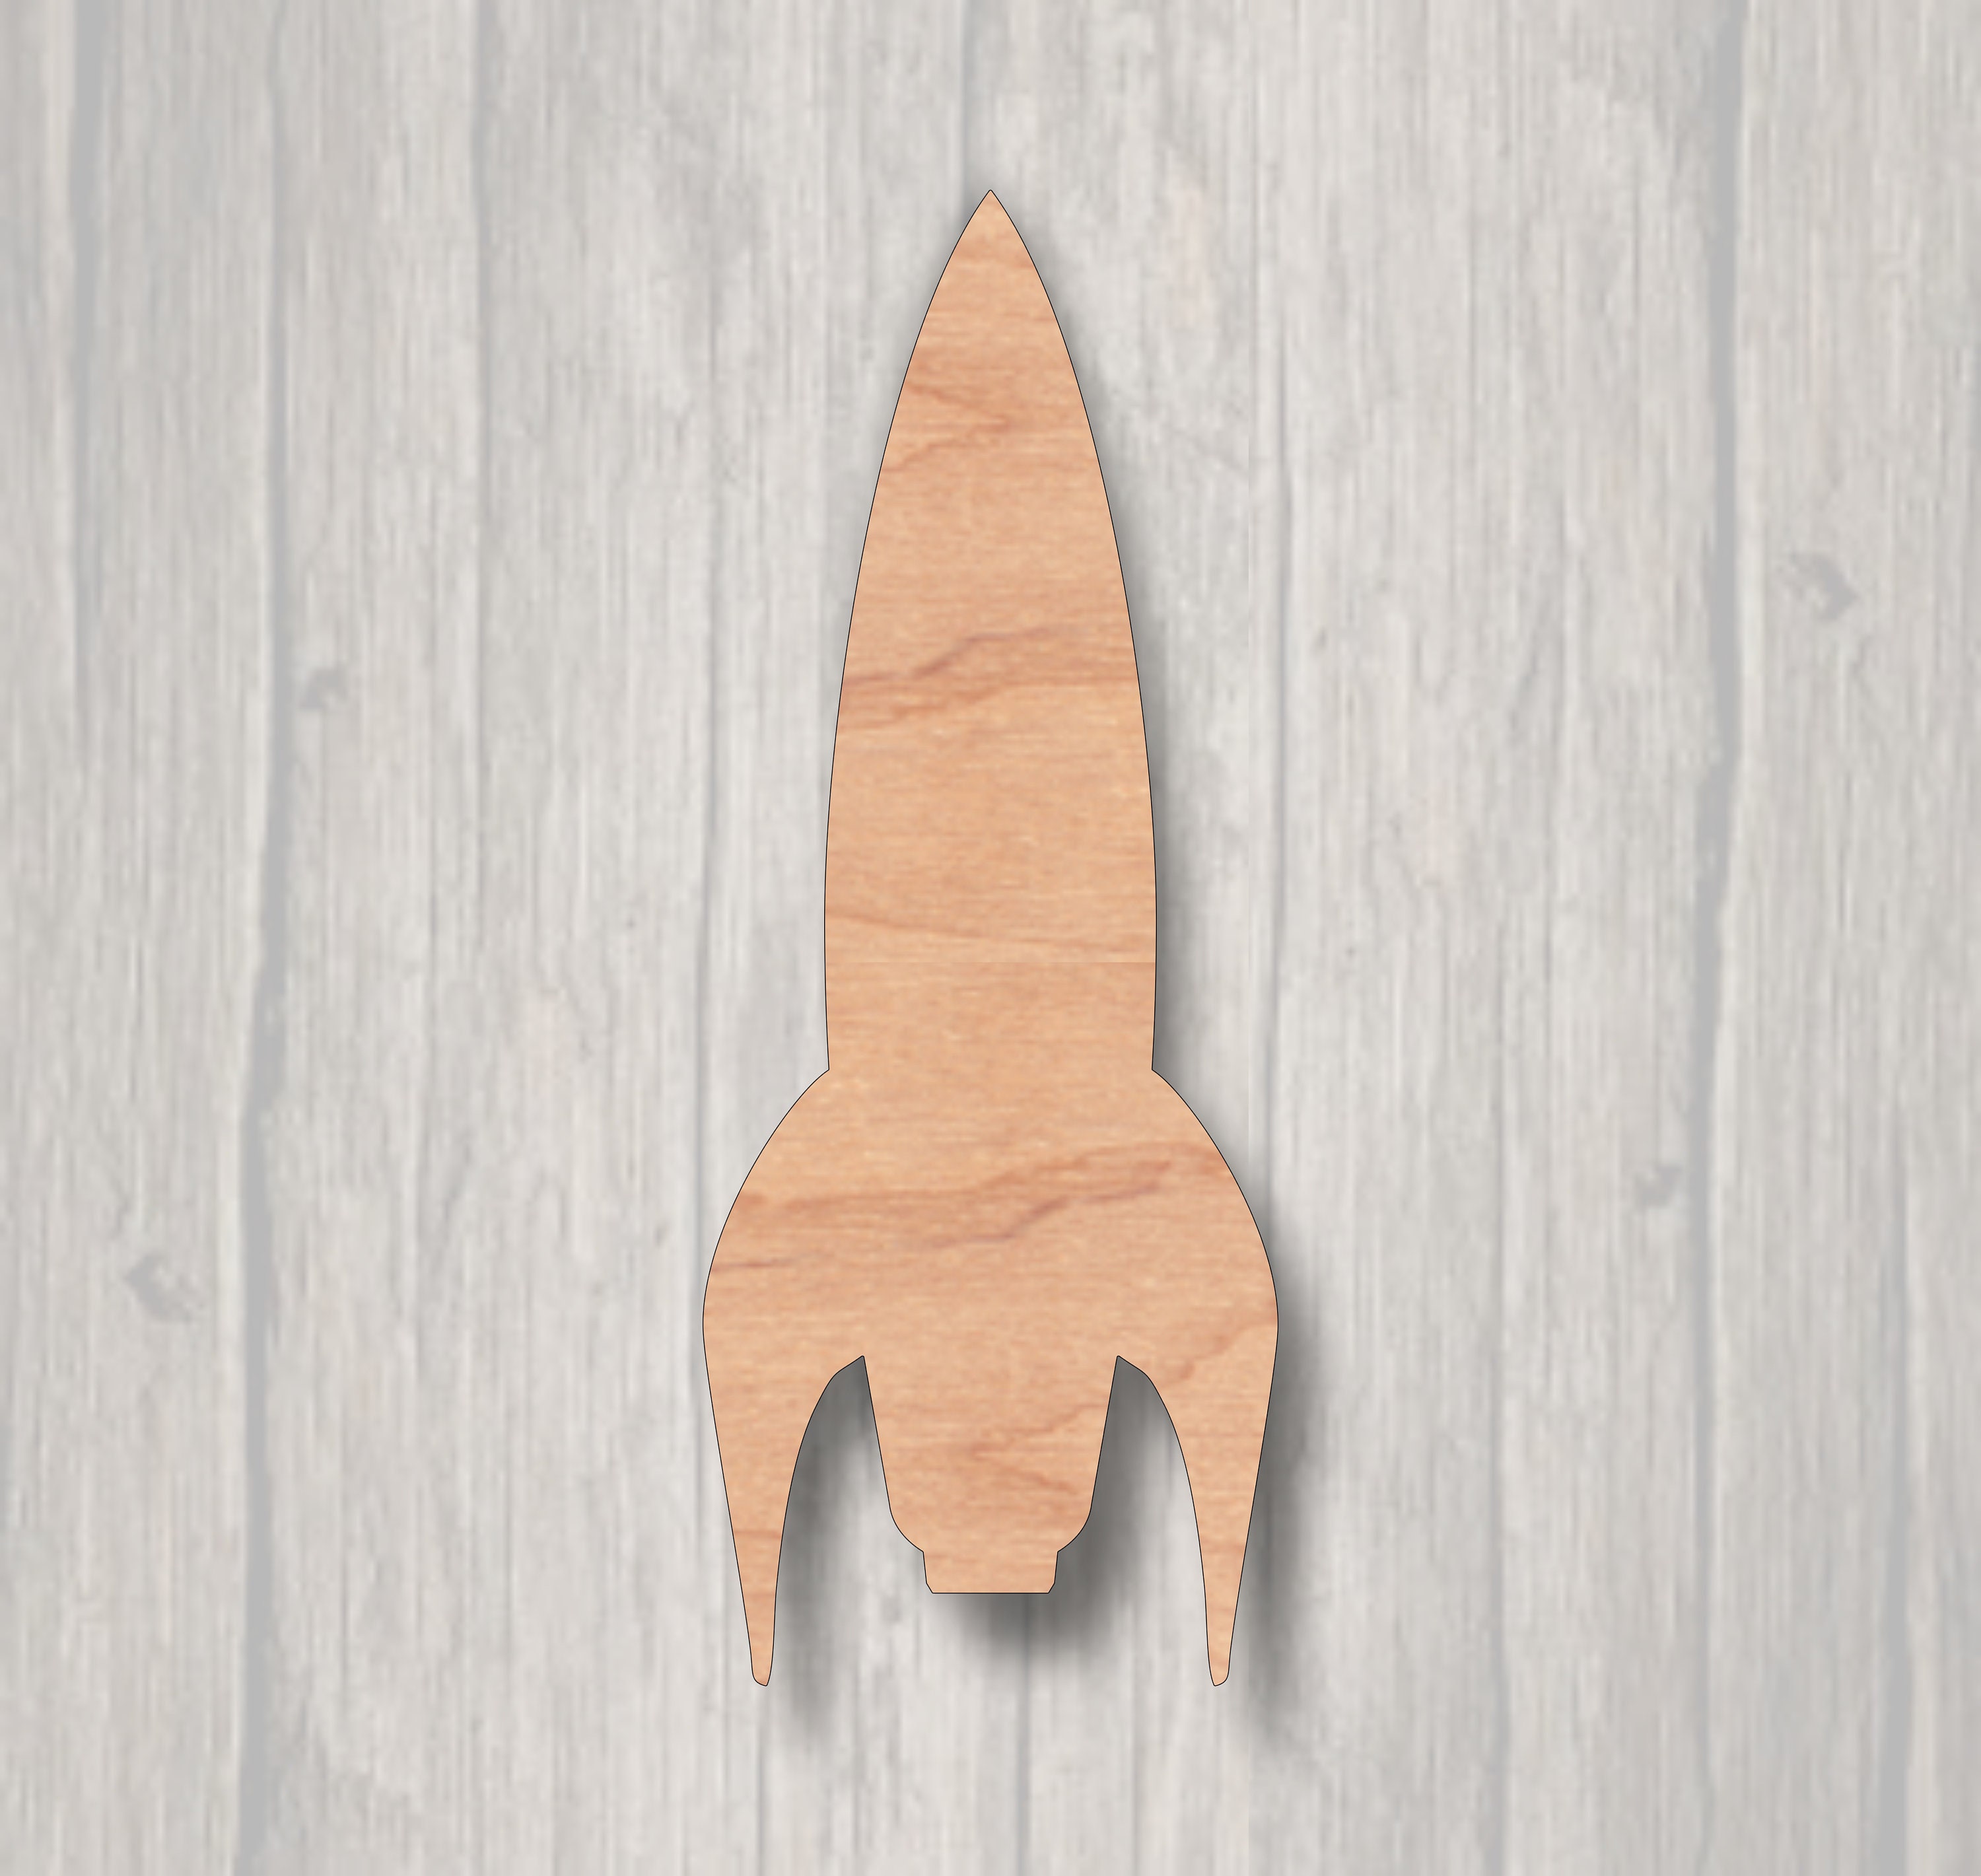 Wooden Rocket Cutout, 12 x 5-1/2